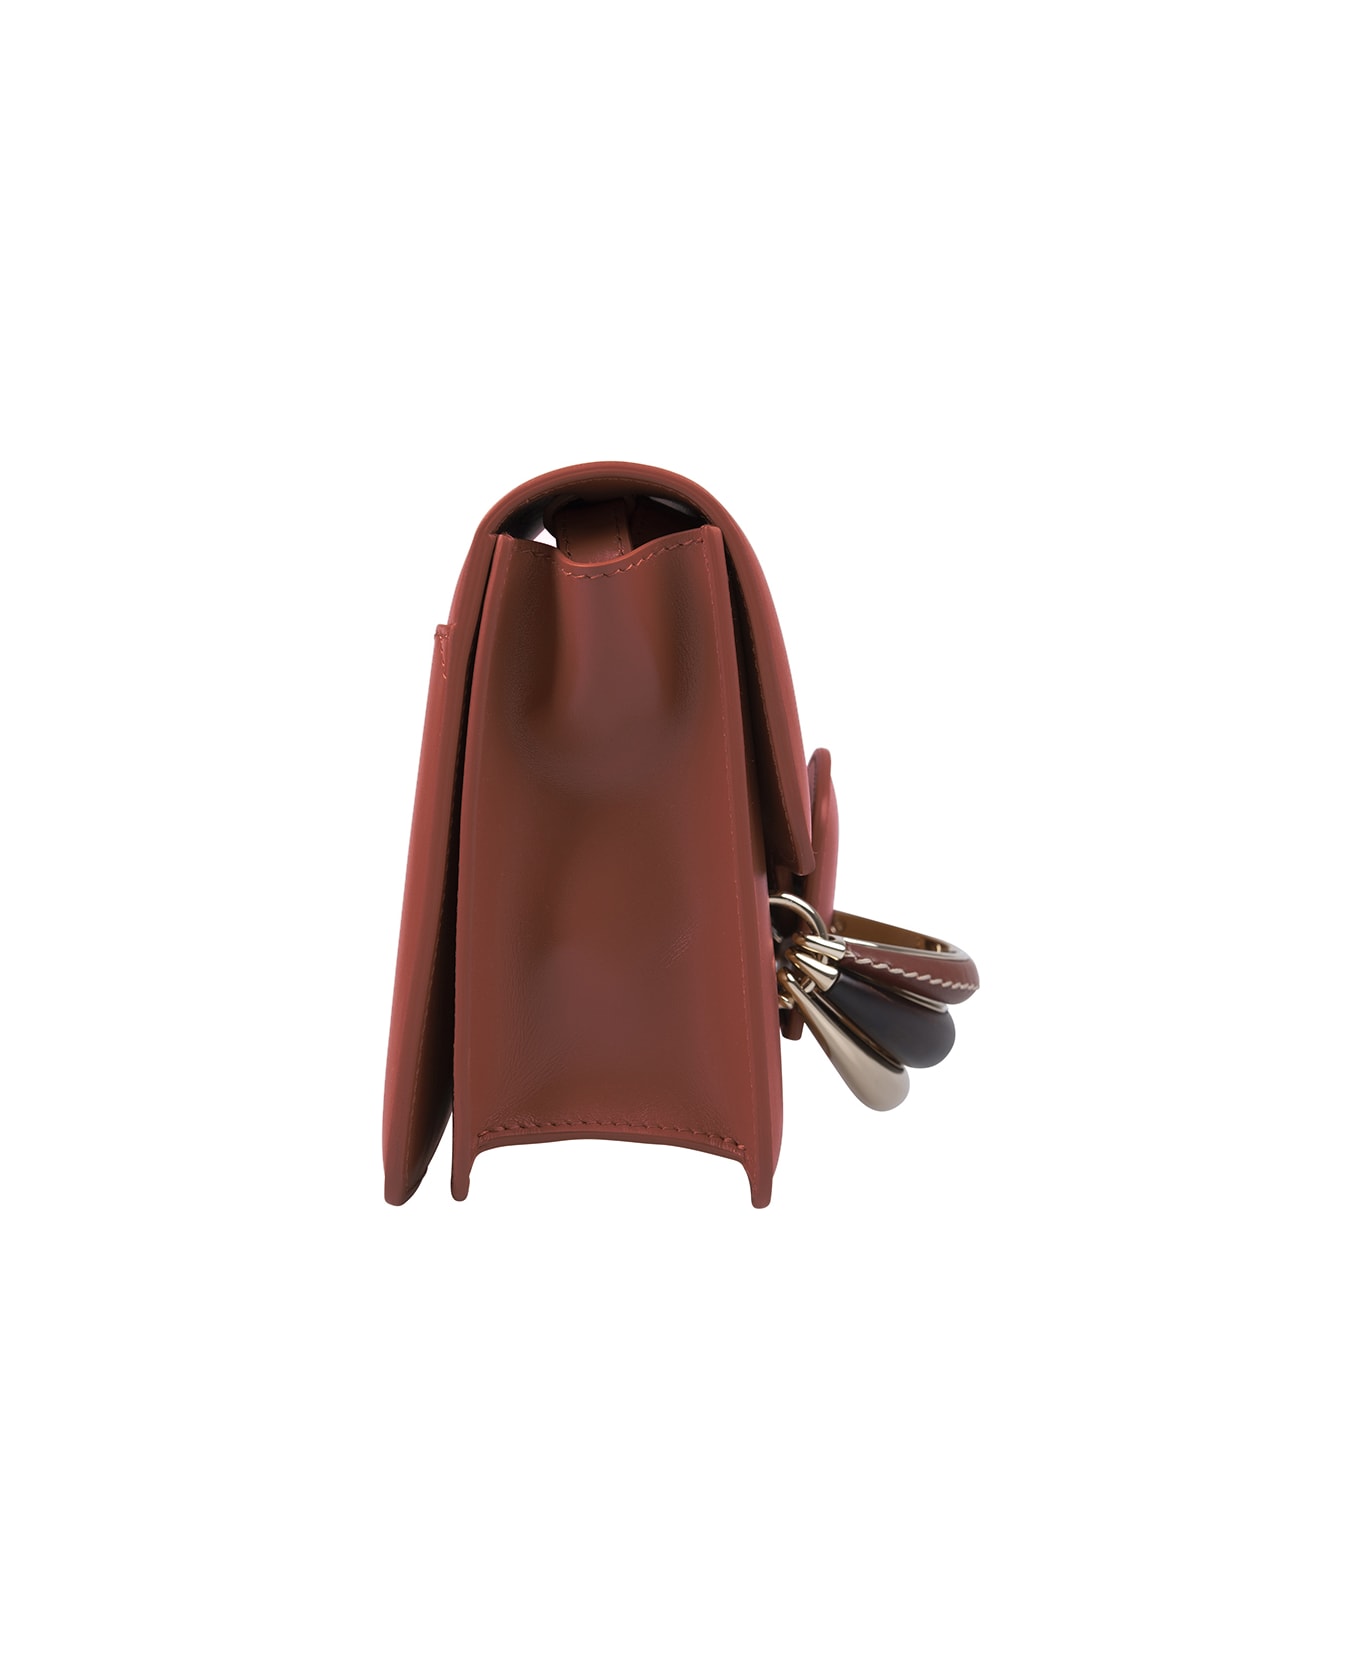 Chloé Kattie Shoulder Bag In Brown Shiny Leather - Sepia brown